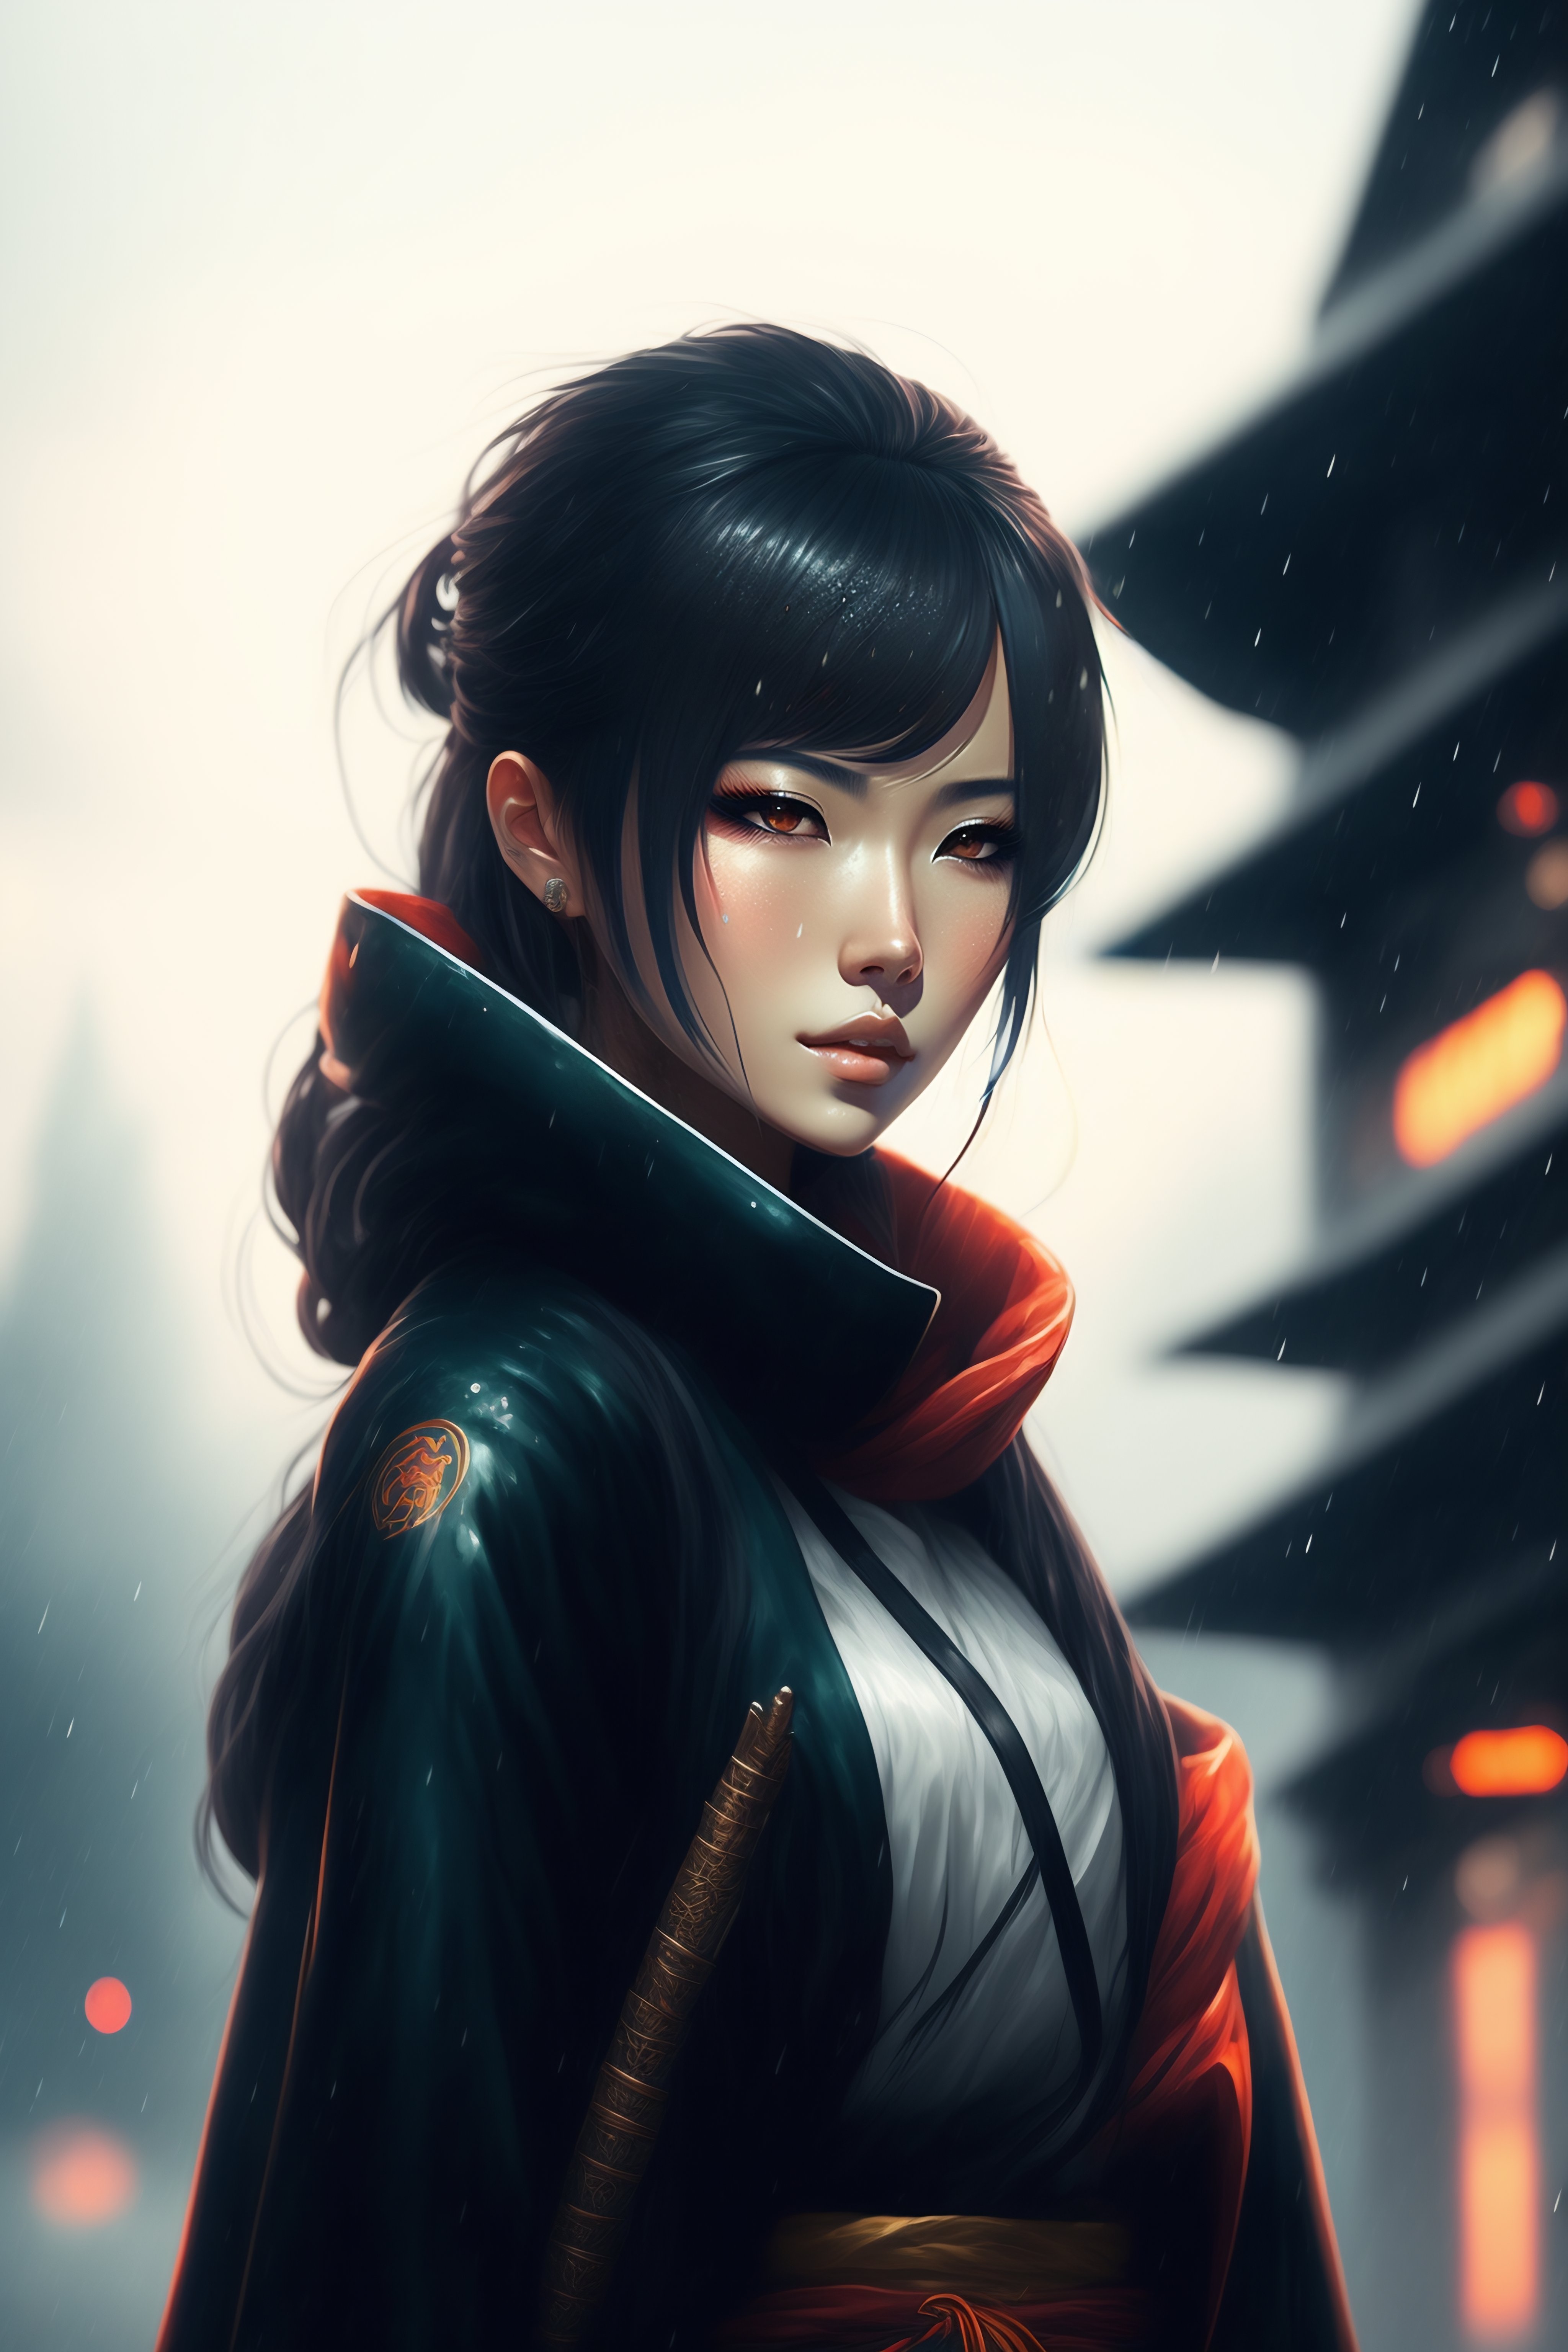 Lexica - Anime samurai girl standing in the rain in the style of guweiz